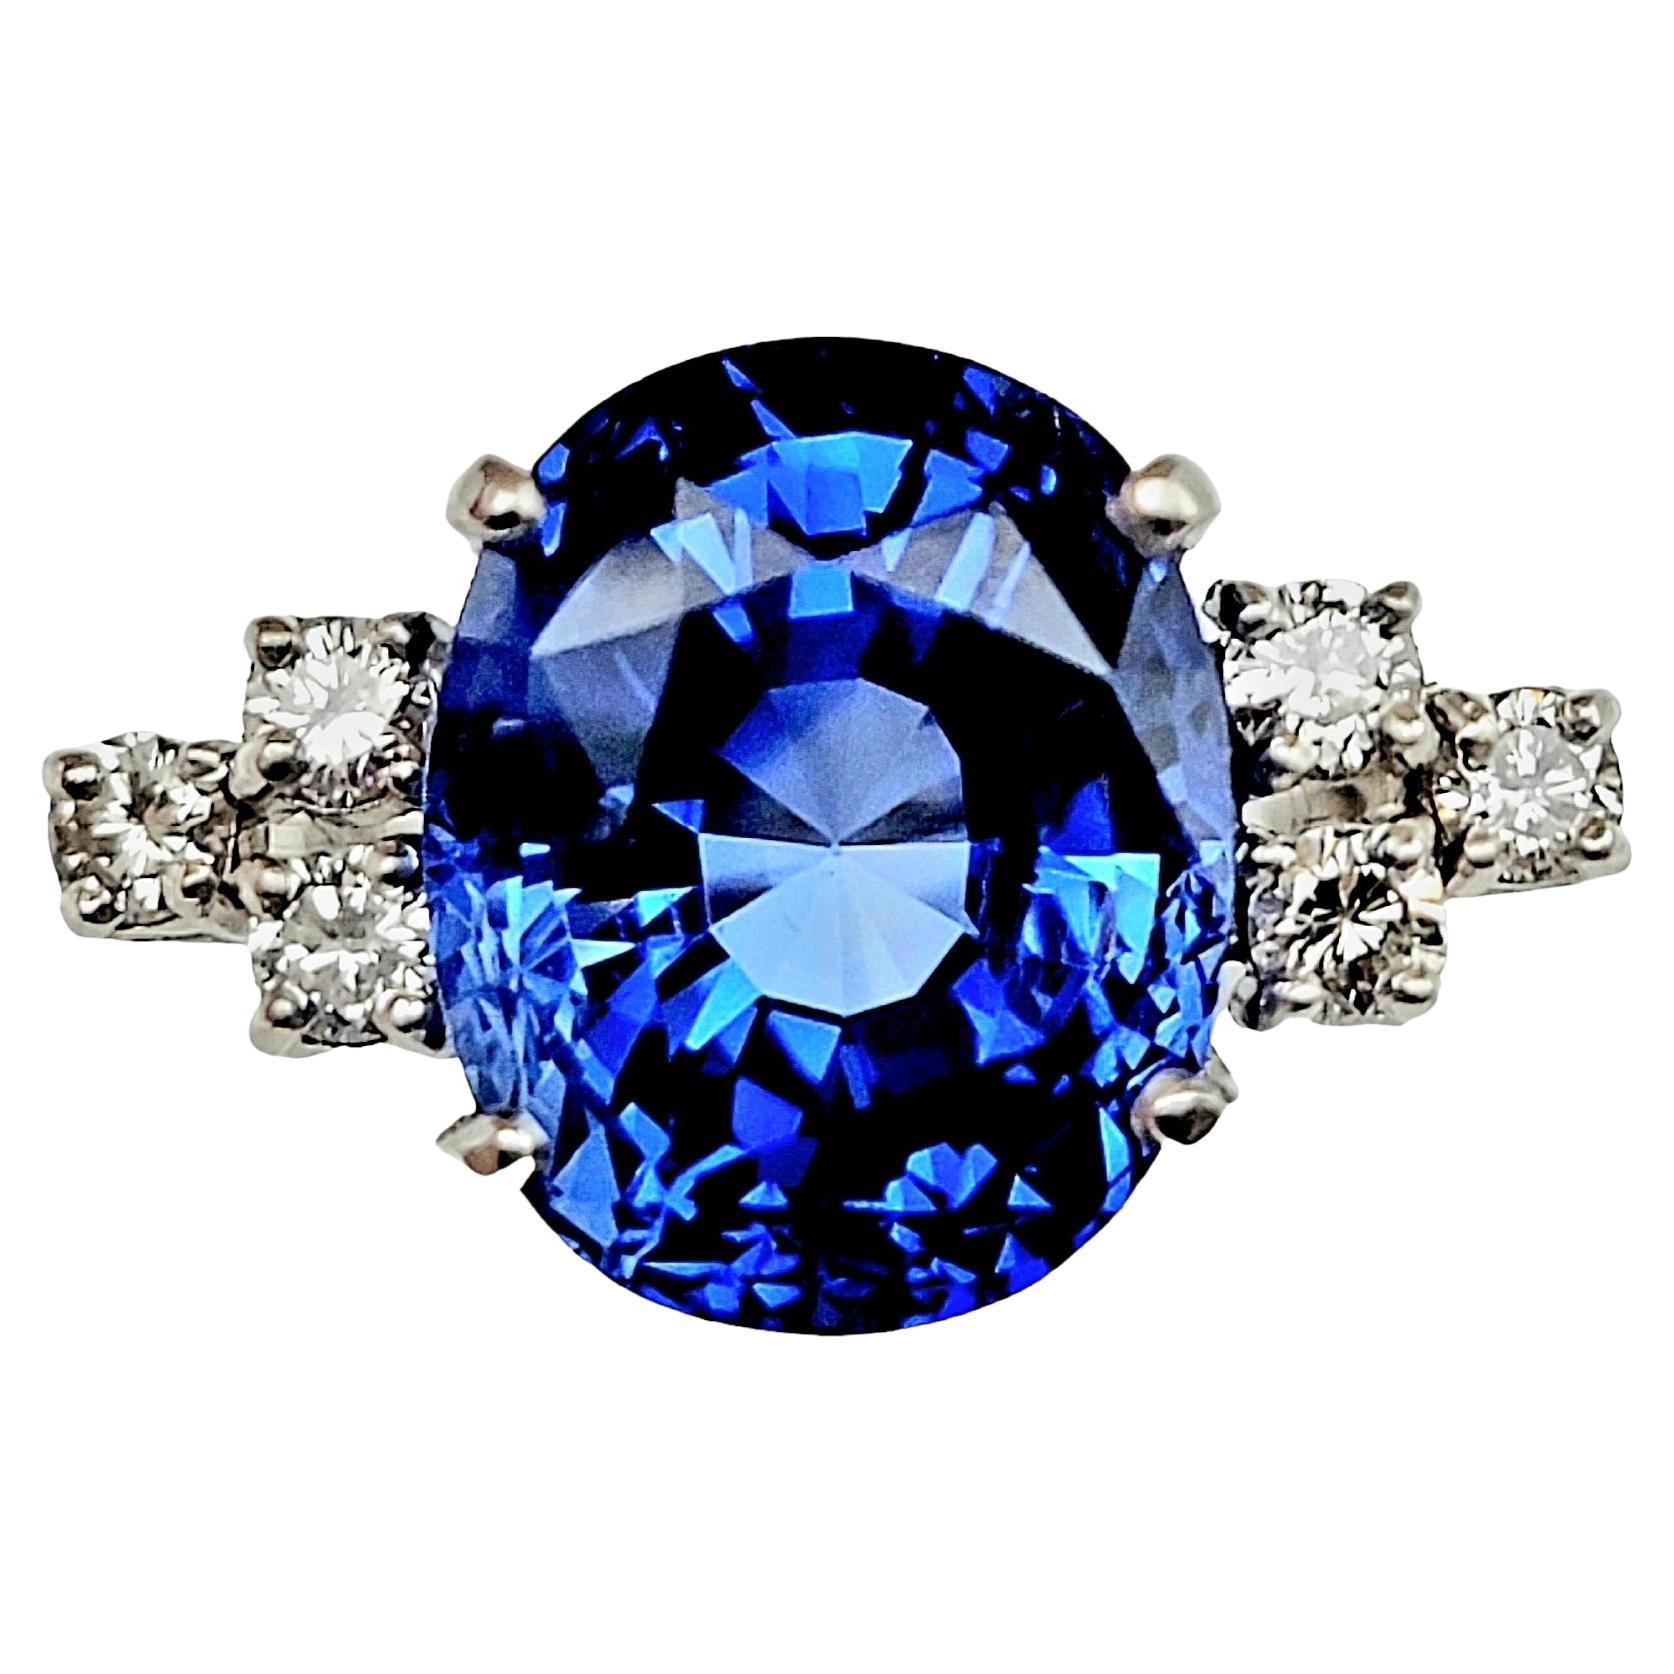 Impressive 15.35 Carat Rare Untreated Oval Ceylon Sapphire and Diamond Ring For Sale